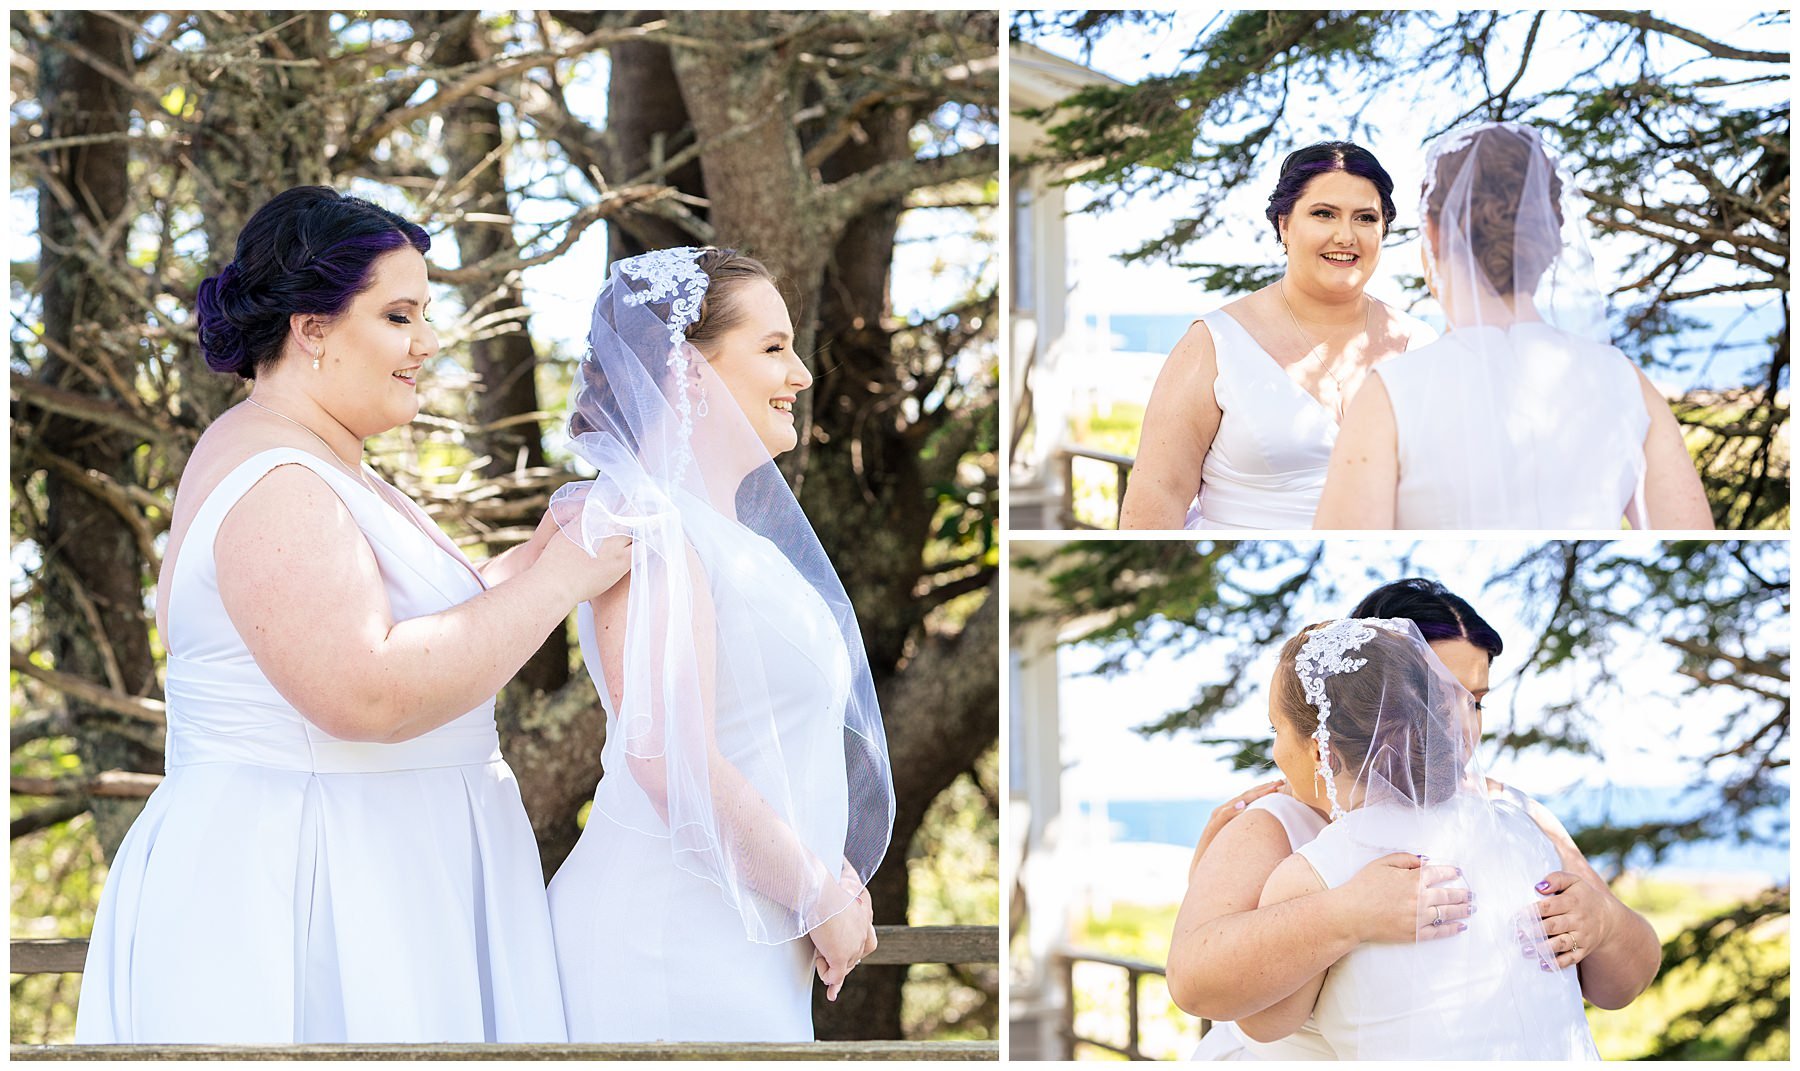 Boothbay Harbor Wedding Photographers, Two Adventurous Souls- 052422_0012.jpg